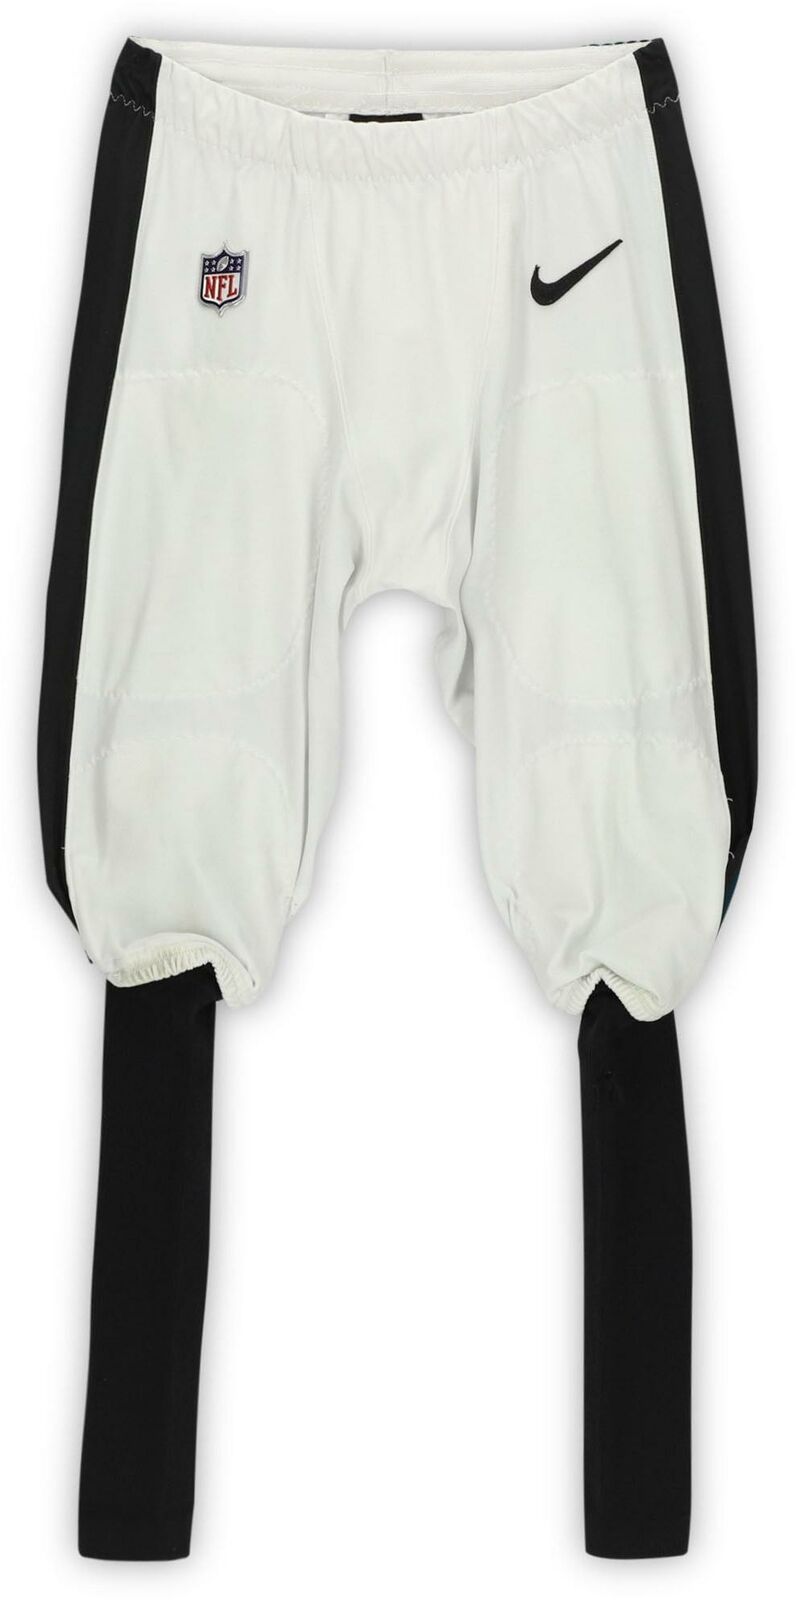 Alex Singleton Eagles Gu White Pants With Black Socks Vs Wft On 1/3/21 - Size 32